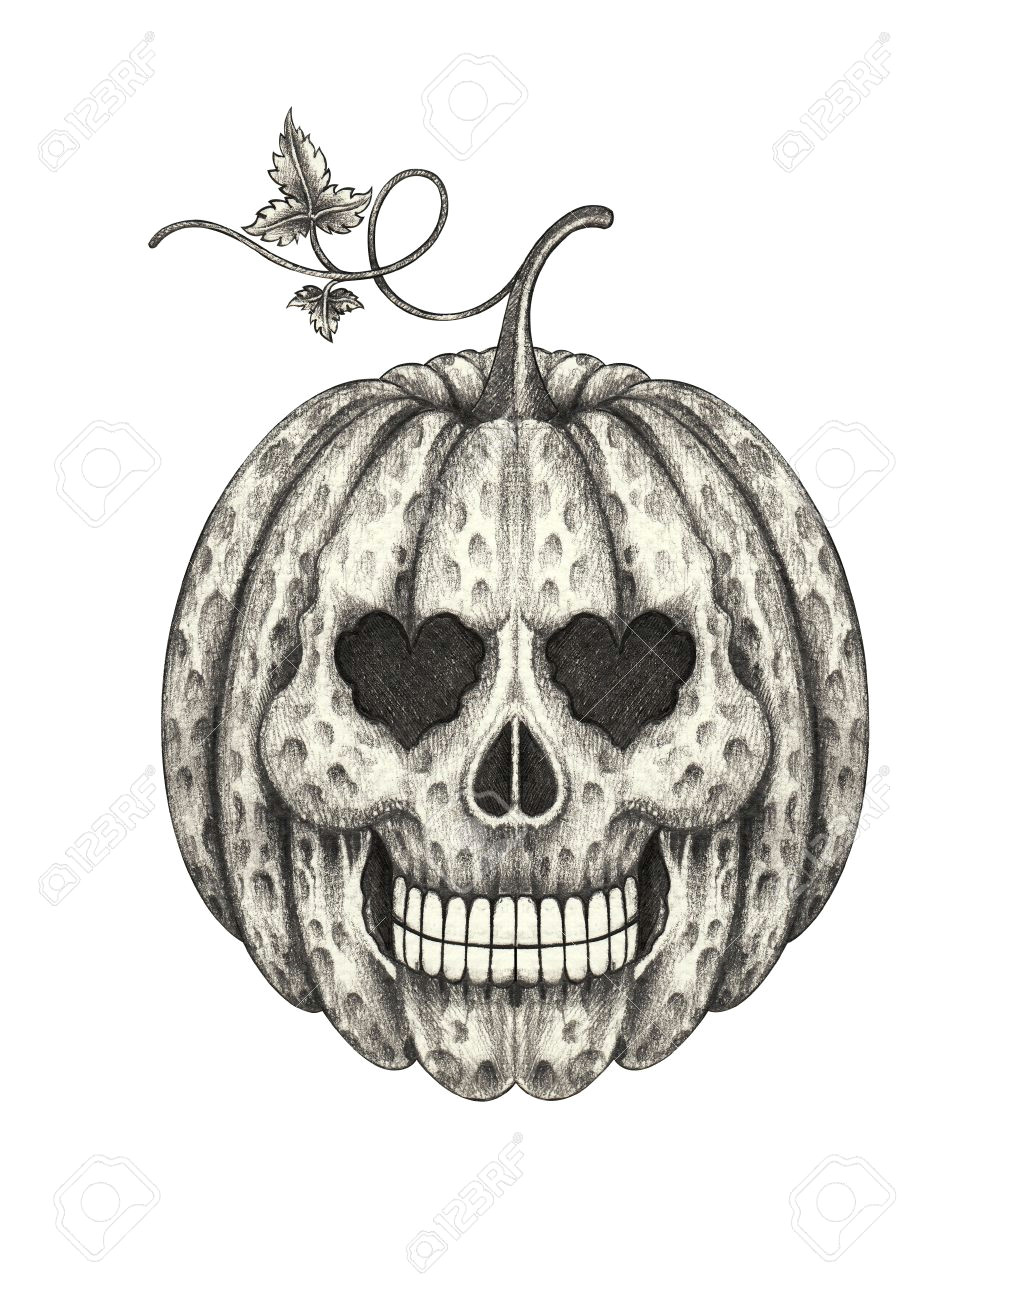 skull head pumpkin halloween hand pencil drawing on paper stock photo 41434411